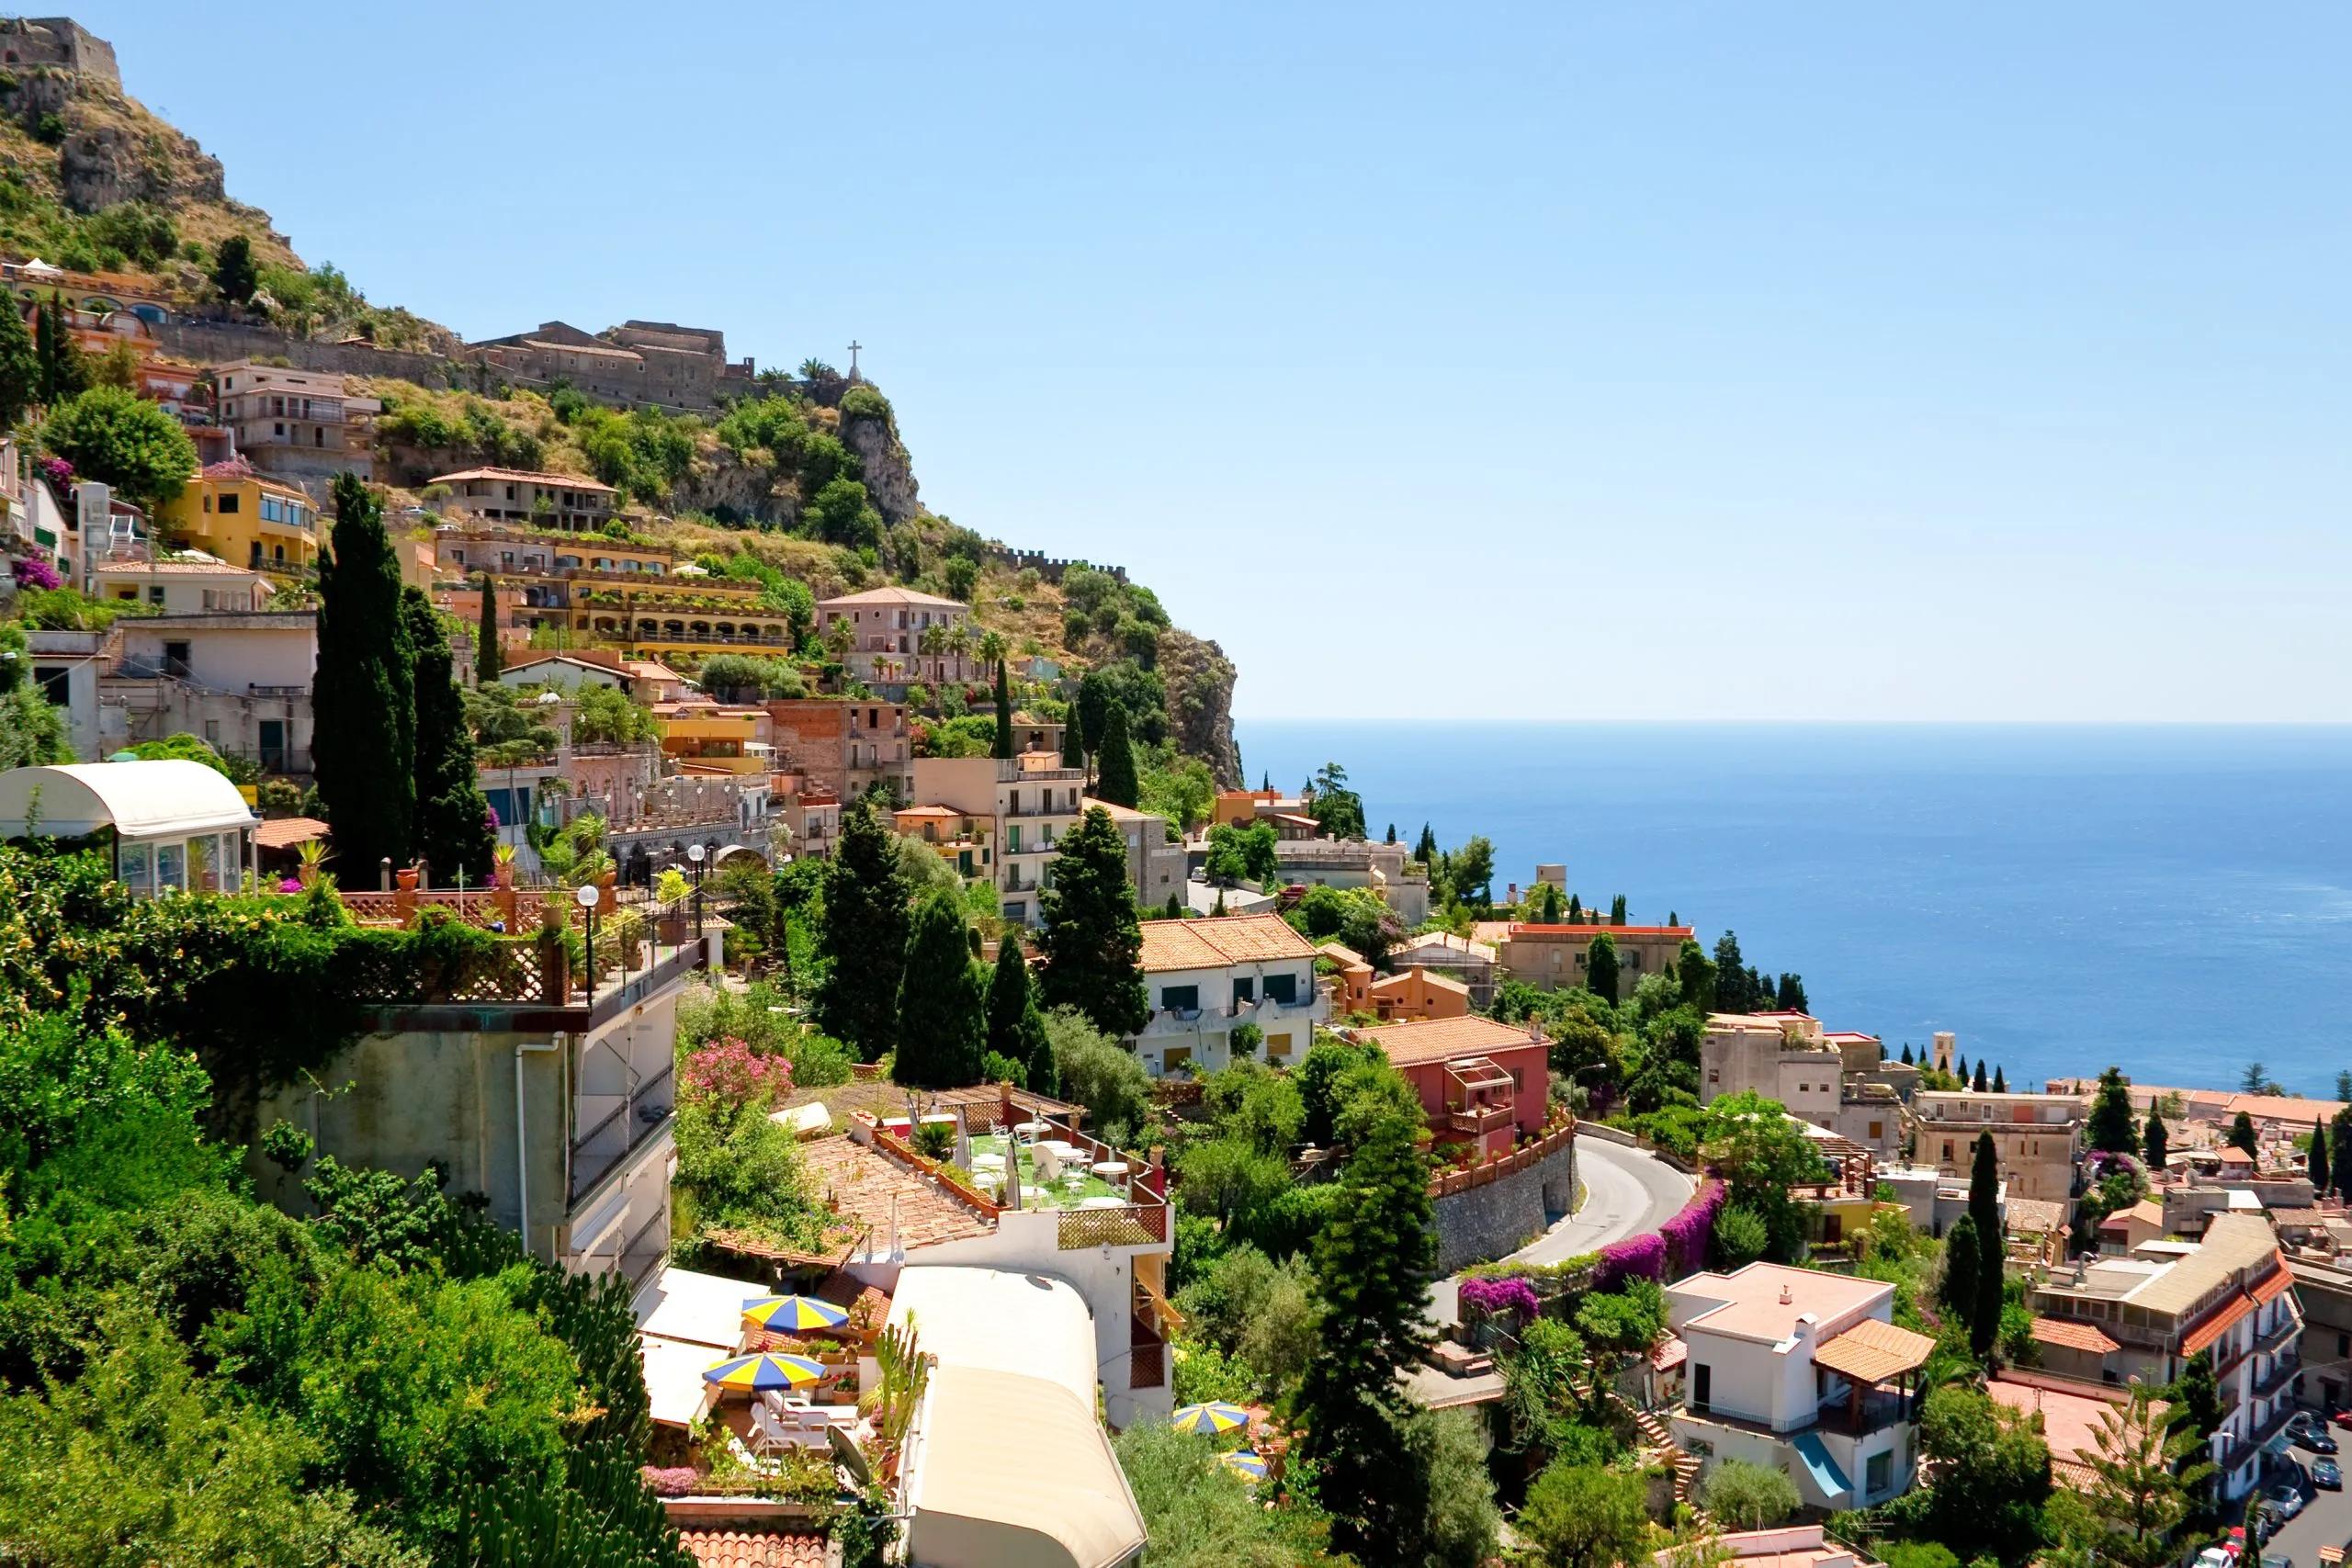 view on town Taormina from Castelmola, Sicily